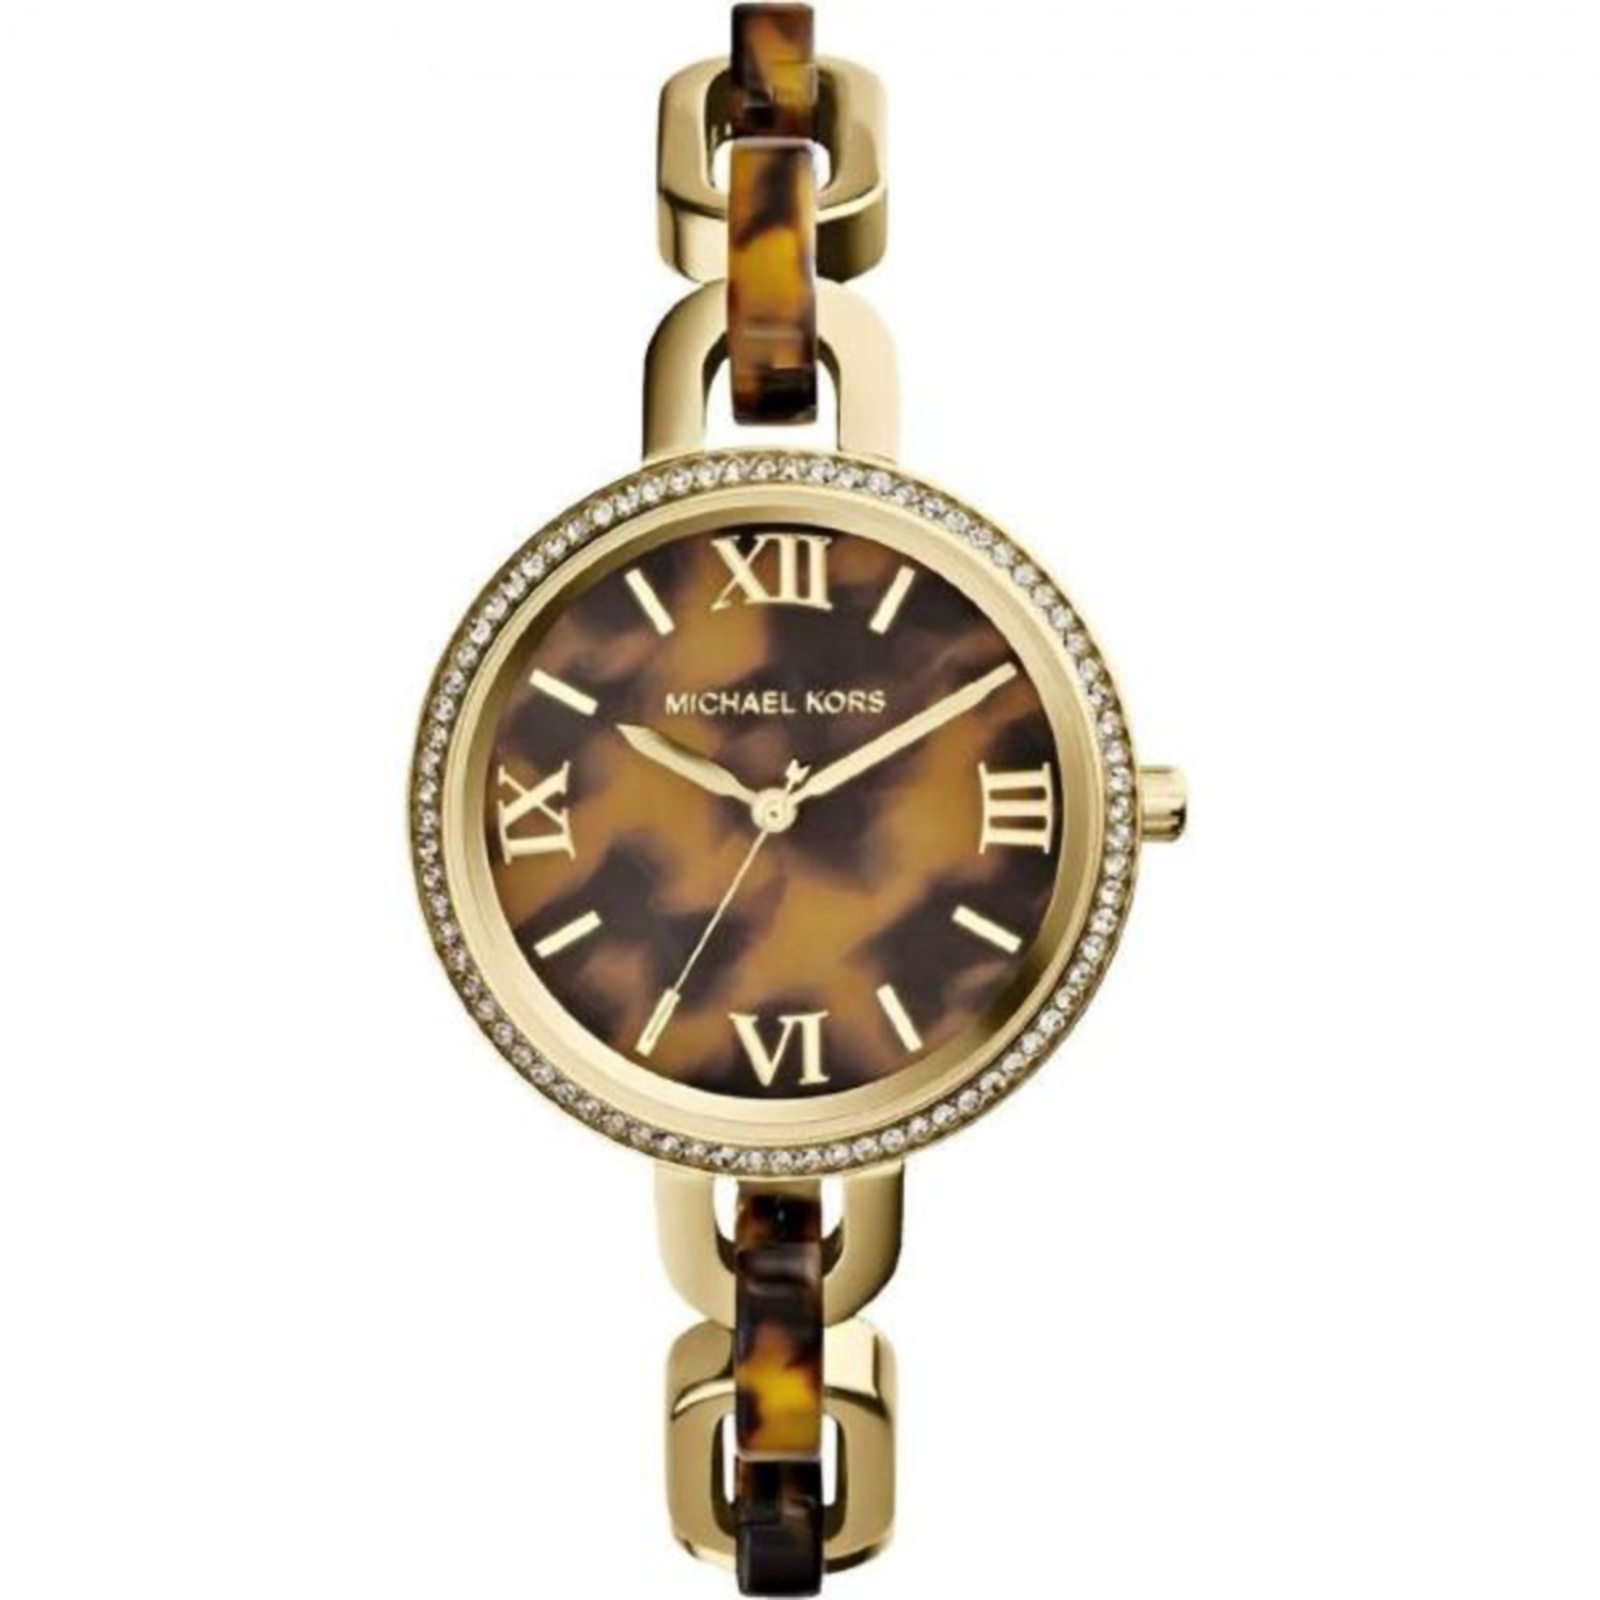 Michael Kors MK4281 Women's Stainless Steel Watch - Two-Tone